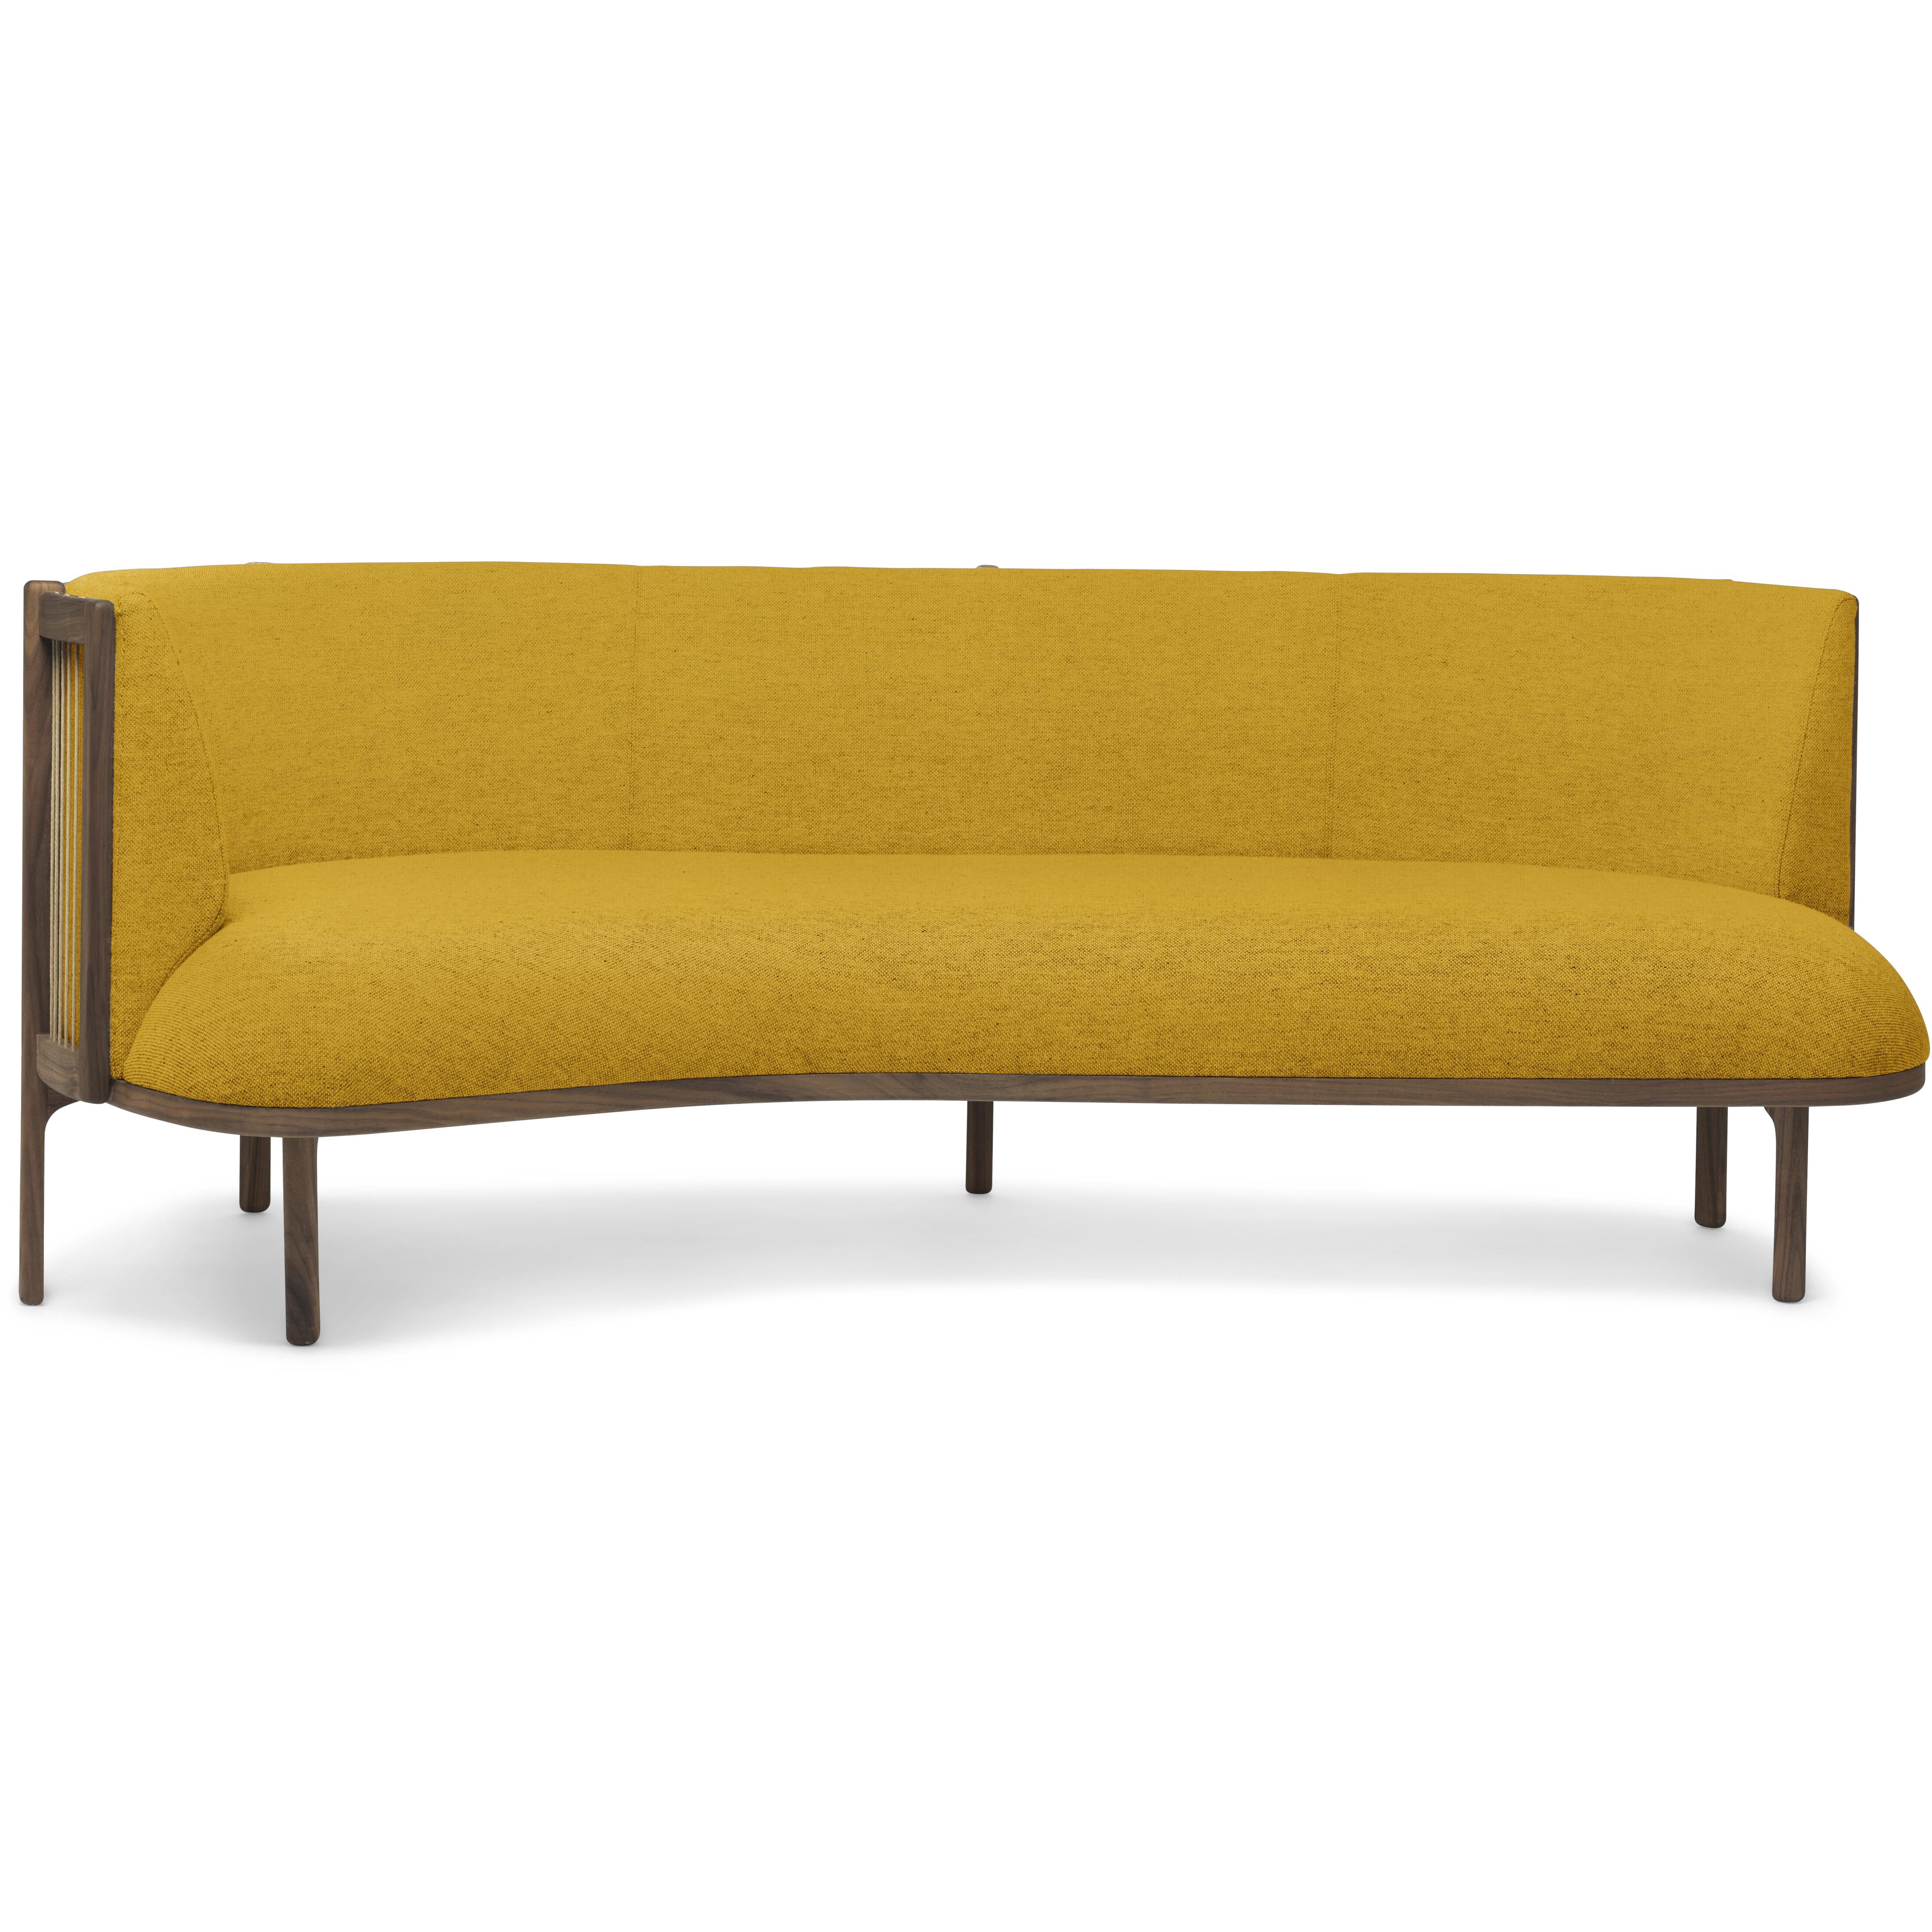 Carl Hansen Rf1903 L Sideways Sofa 3 Seeater Left Walnut Oil/Hallingdal 457 Fabric, Yellow/Natural Brown